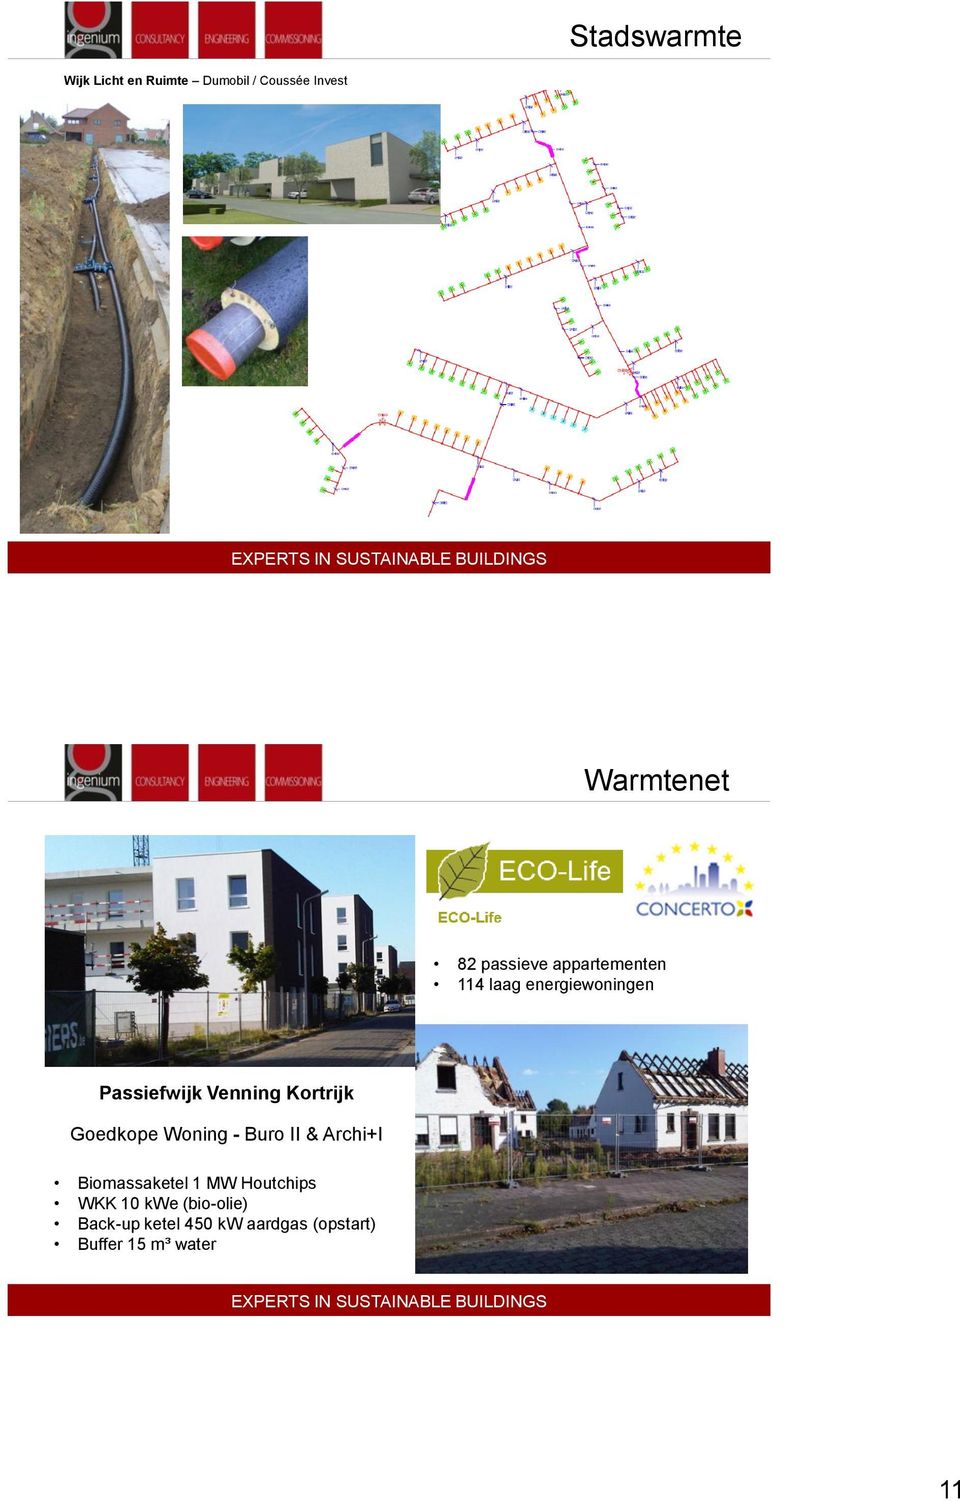 Kortrijk Goedkope Woning - Buro II & Archi+I Biomassaketel 1 MW Houtchips